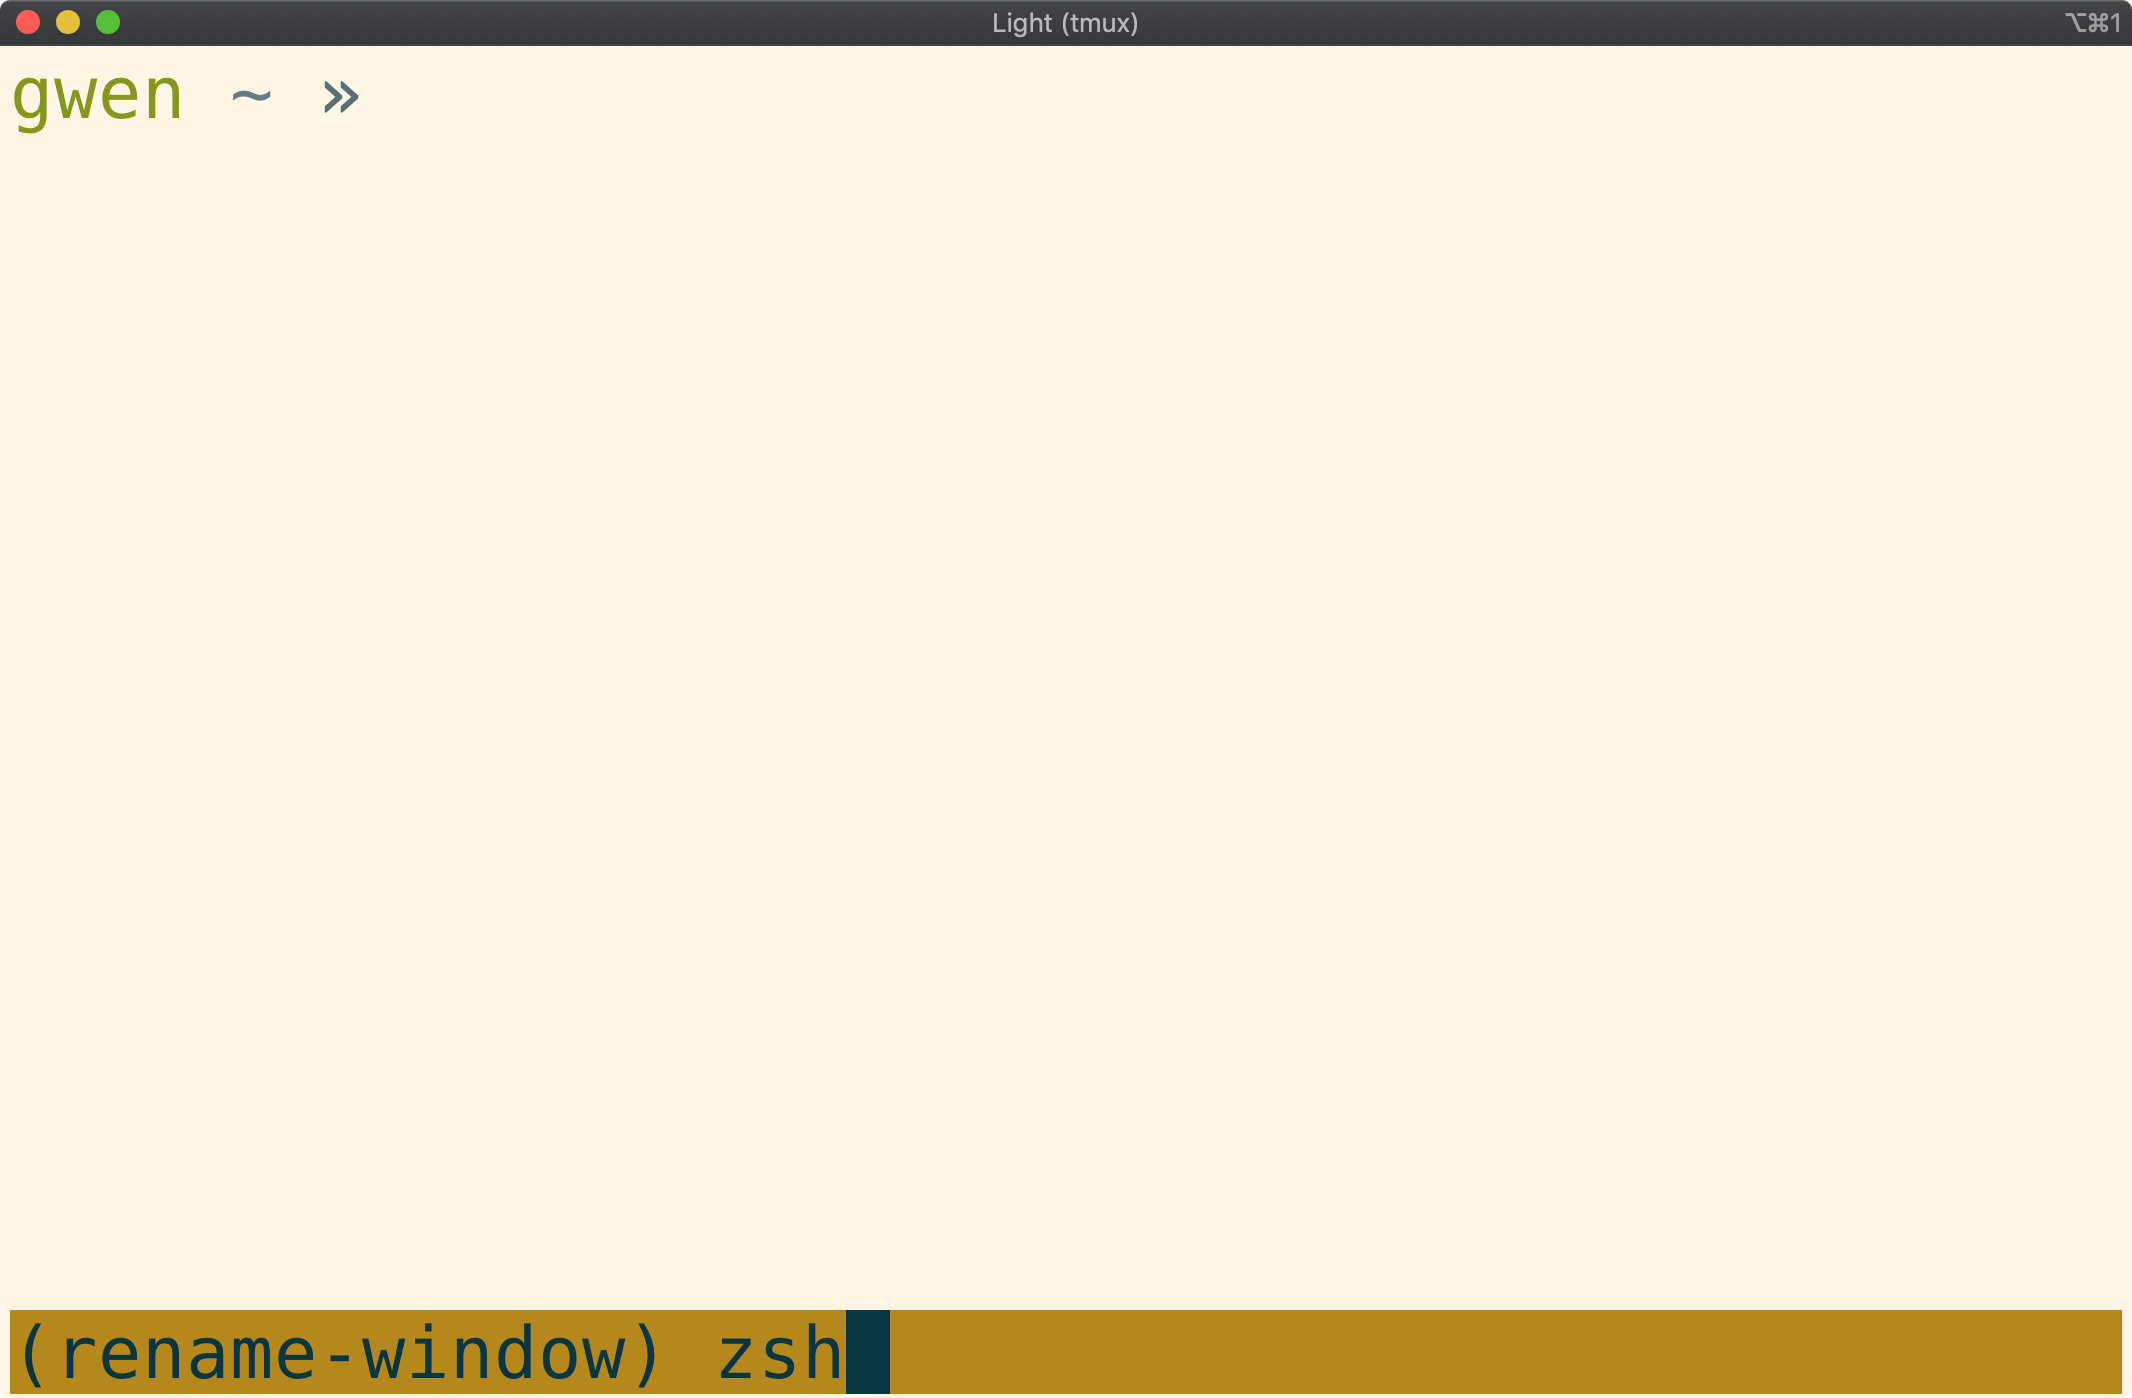 Tmux window showing (rename-window) command prompt